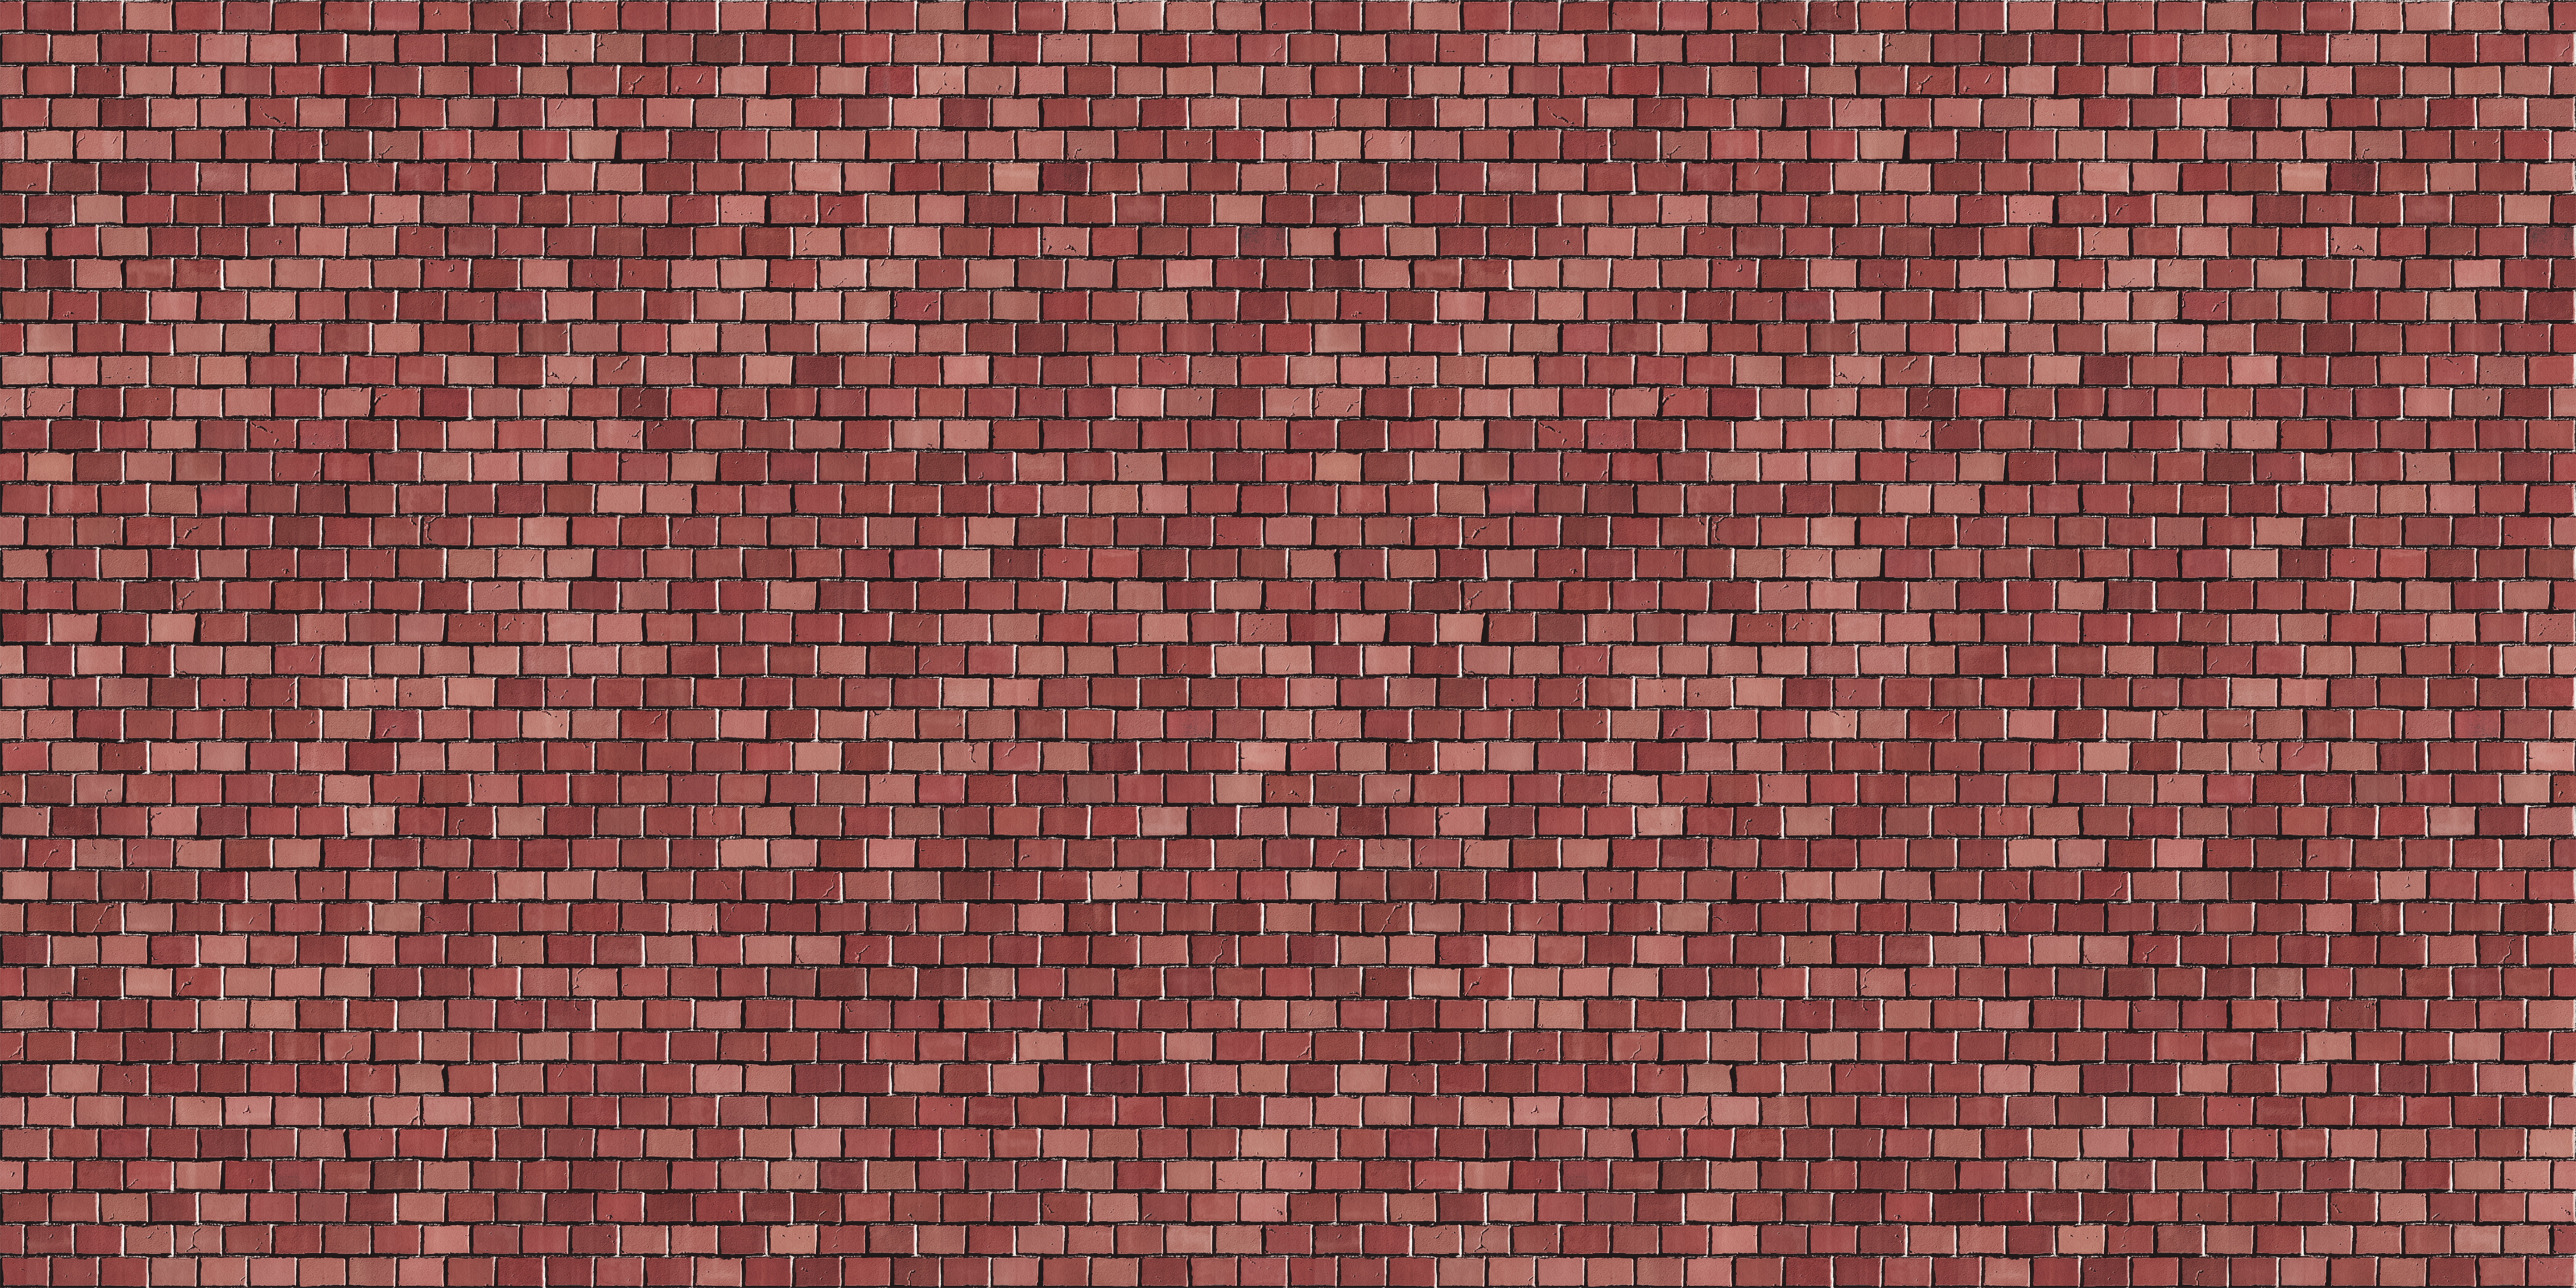 header-bond-red-brick-wall-seamless-pattern-background-texture.jpg